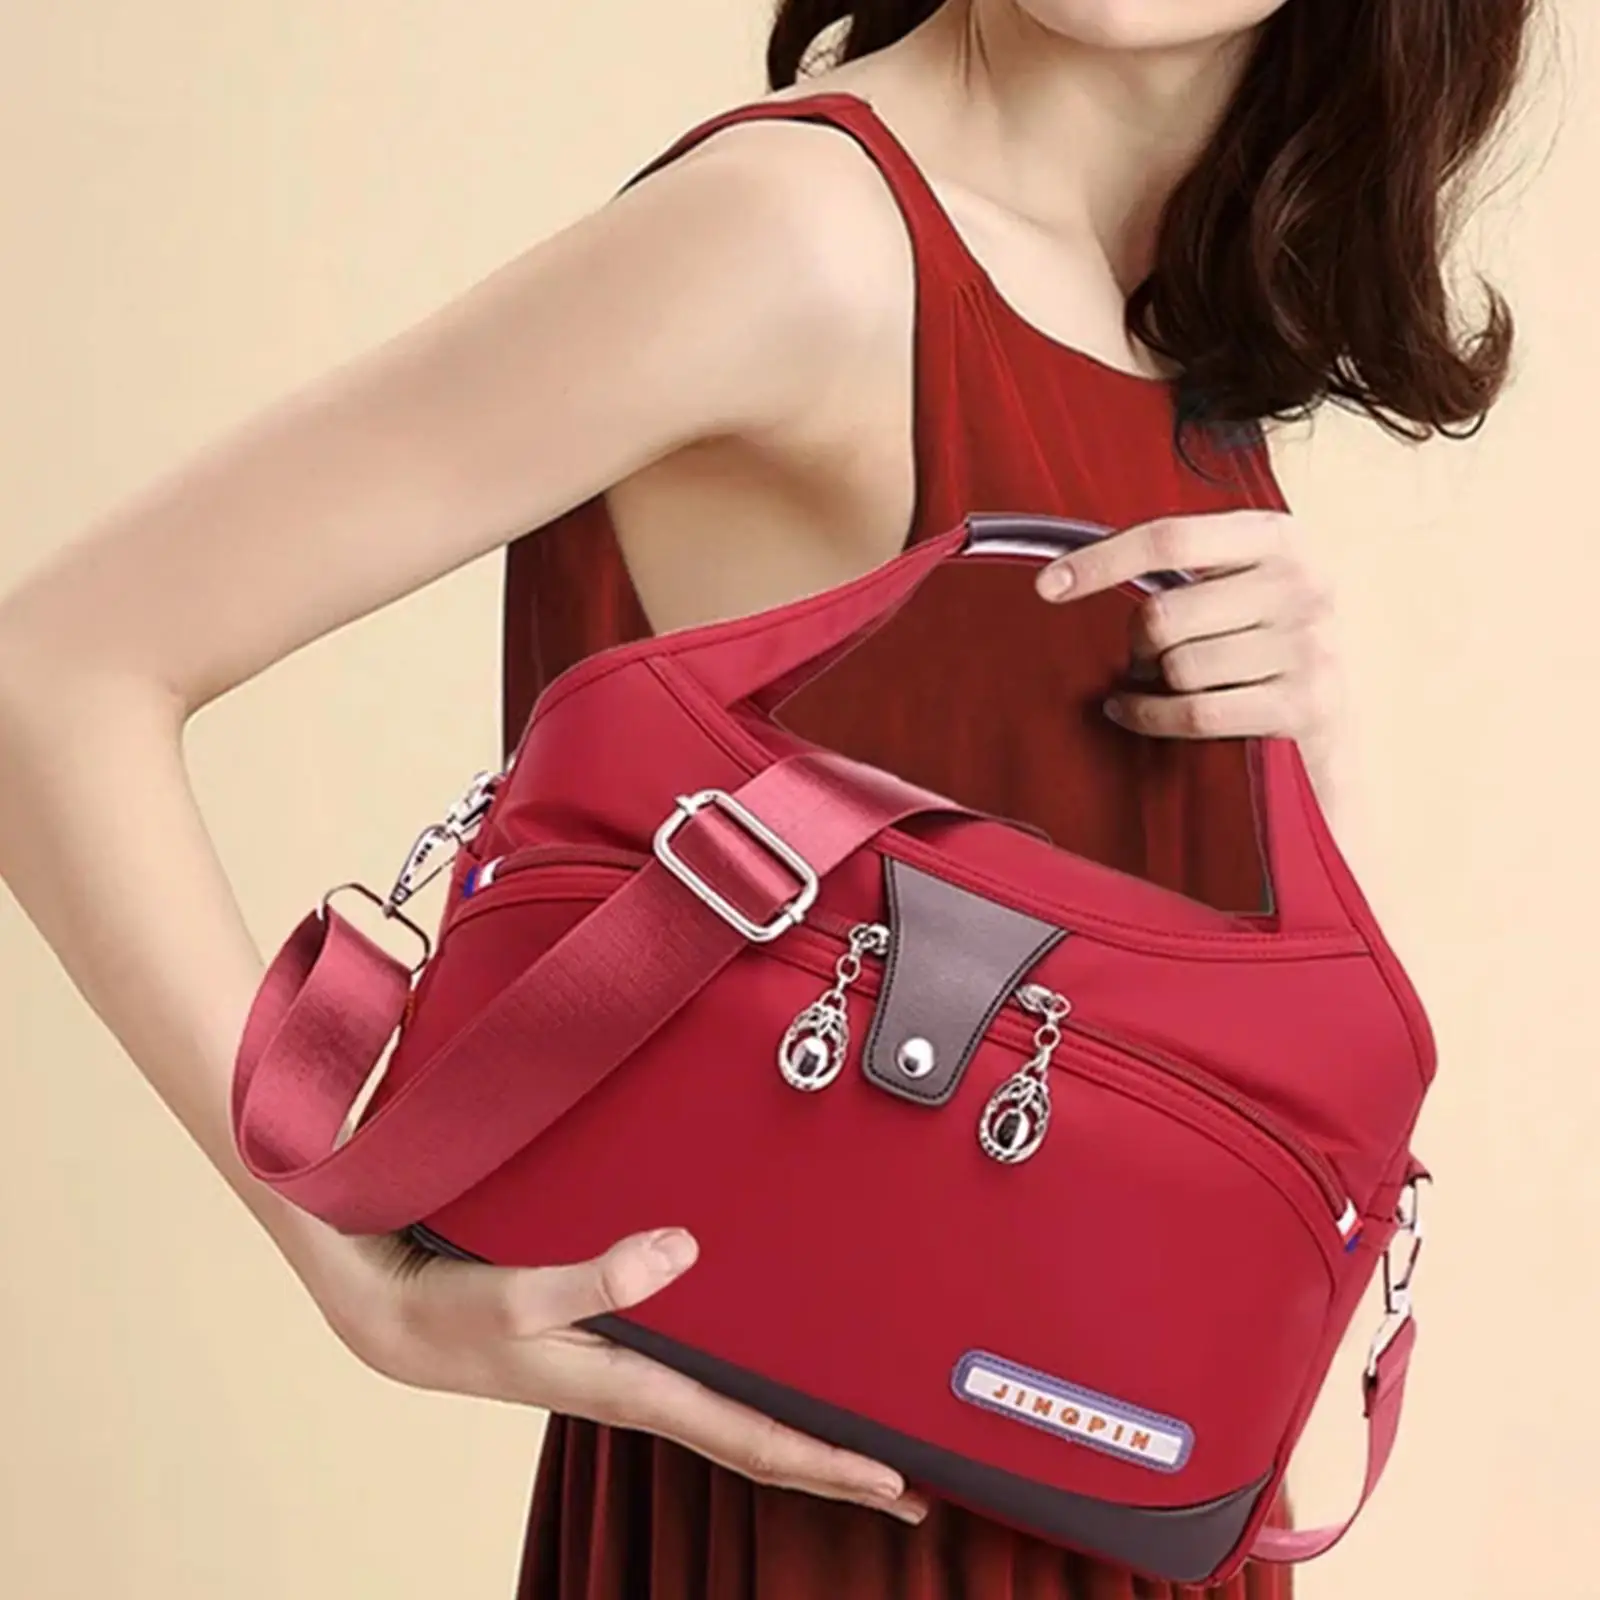 

Fashion Anti-theft Handbag Women Large Capacity Zipper Waterproof Handbag Shoulder Bags Large Tote Bag With Multi Compartments